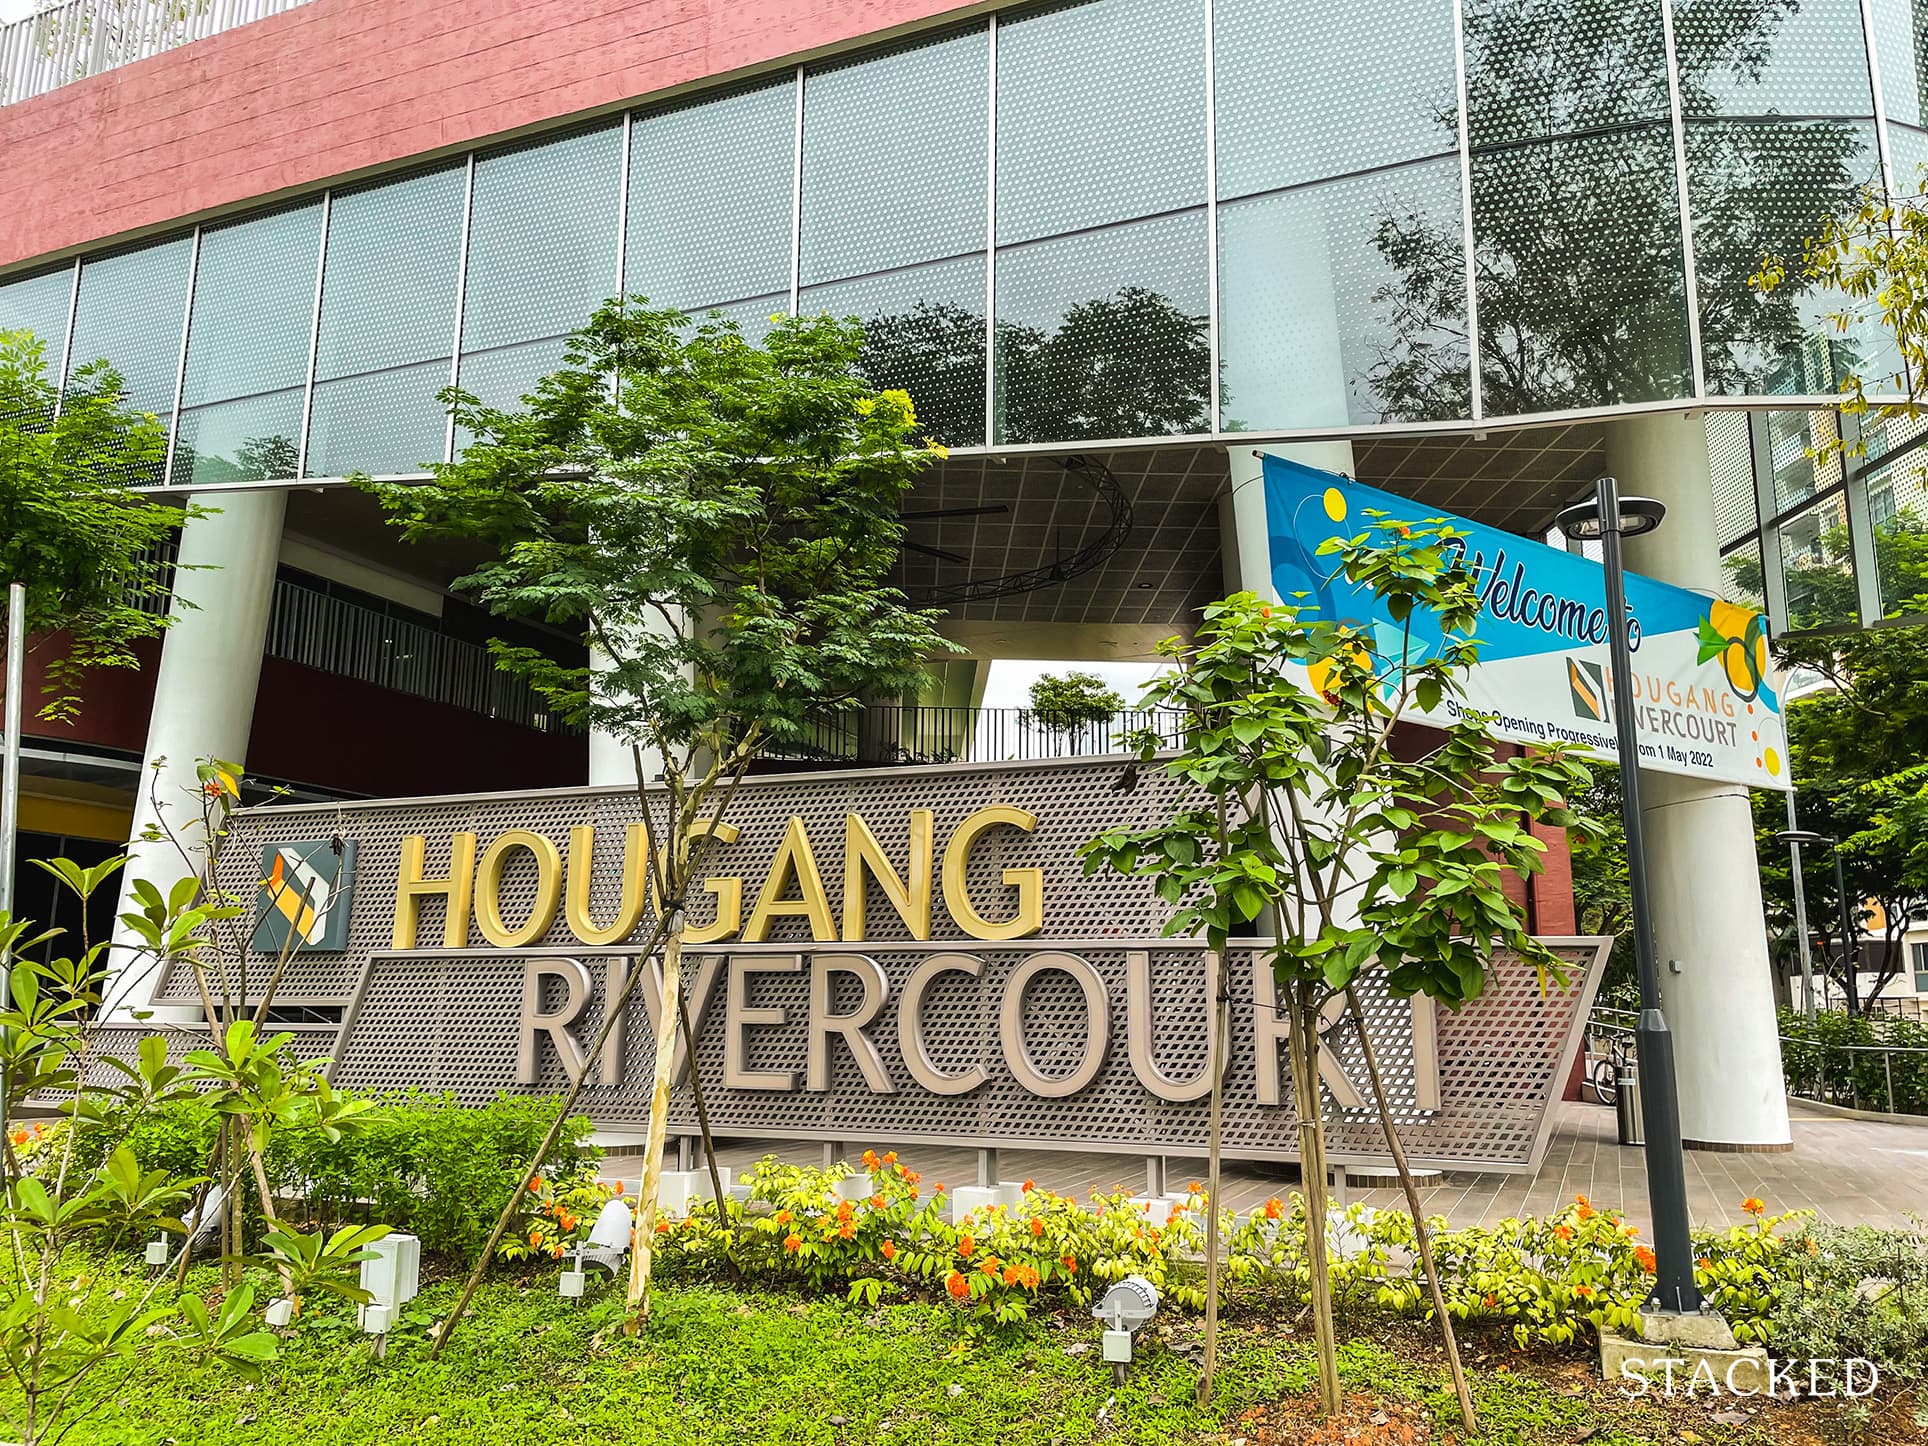 Hougang RiverCourt signage